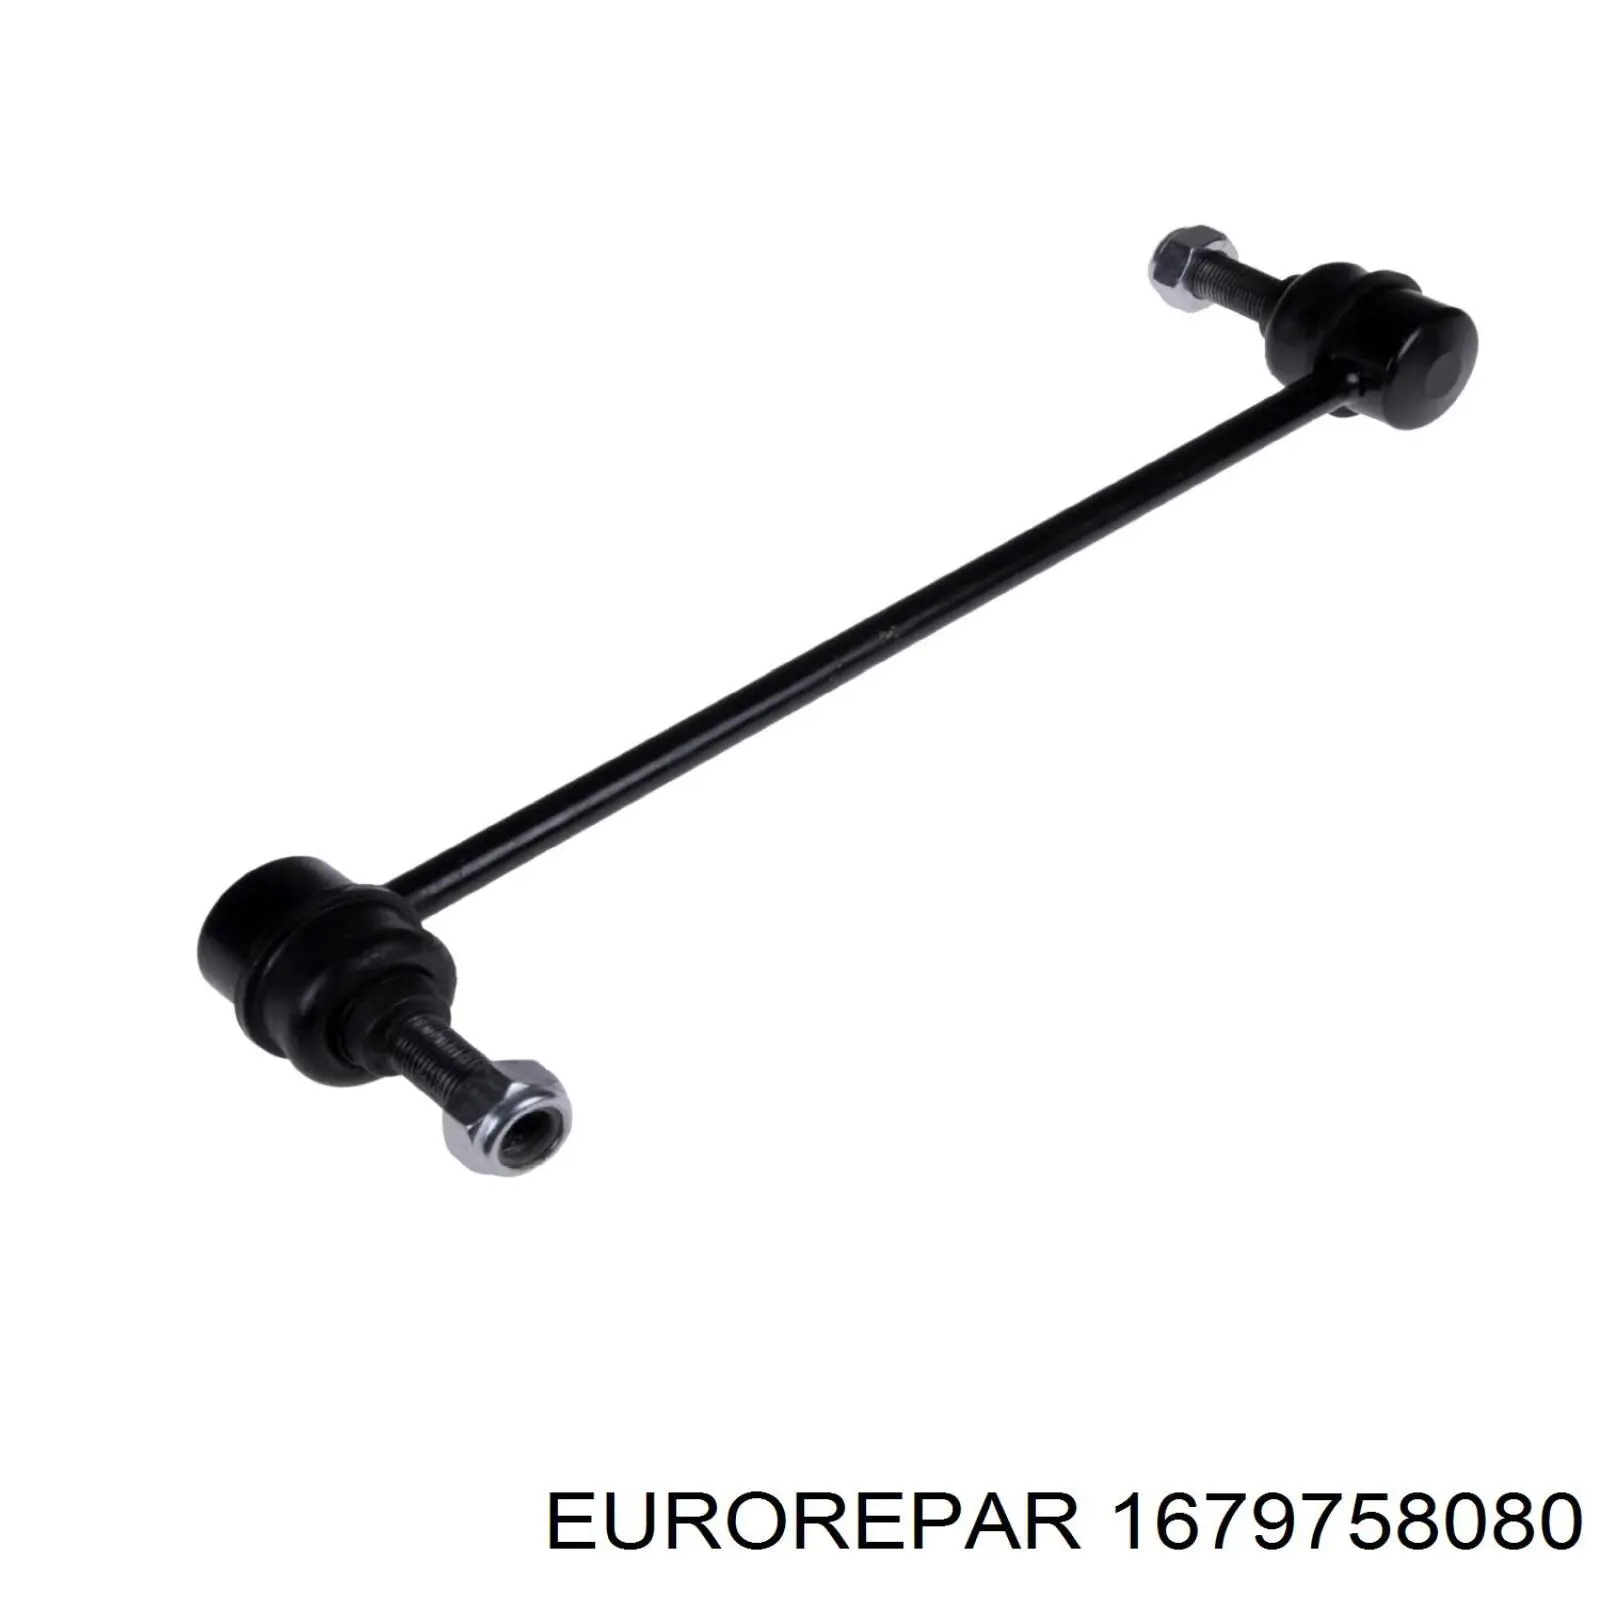 1679758080 Eurorepar soporte de barra estabilizadora delantera